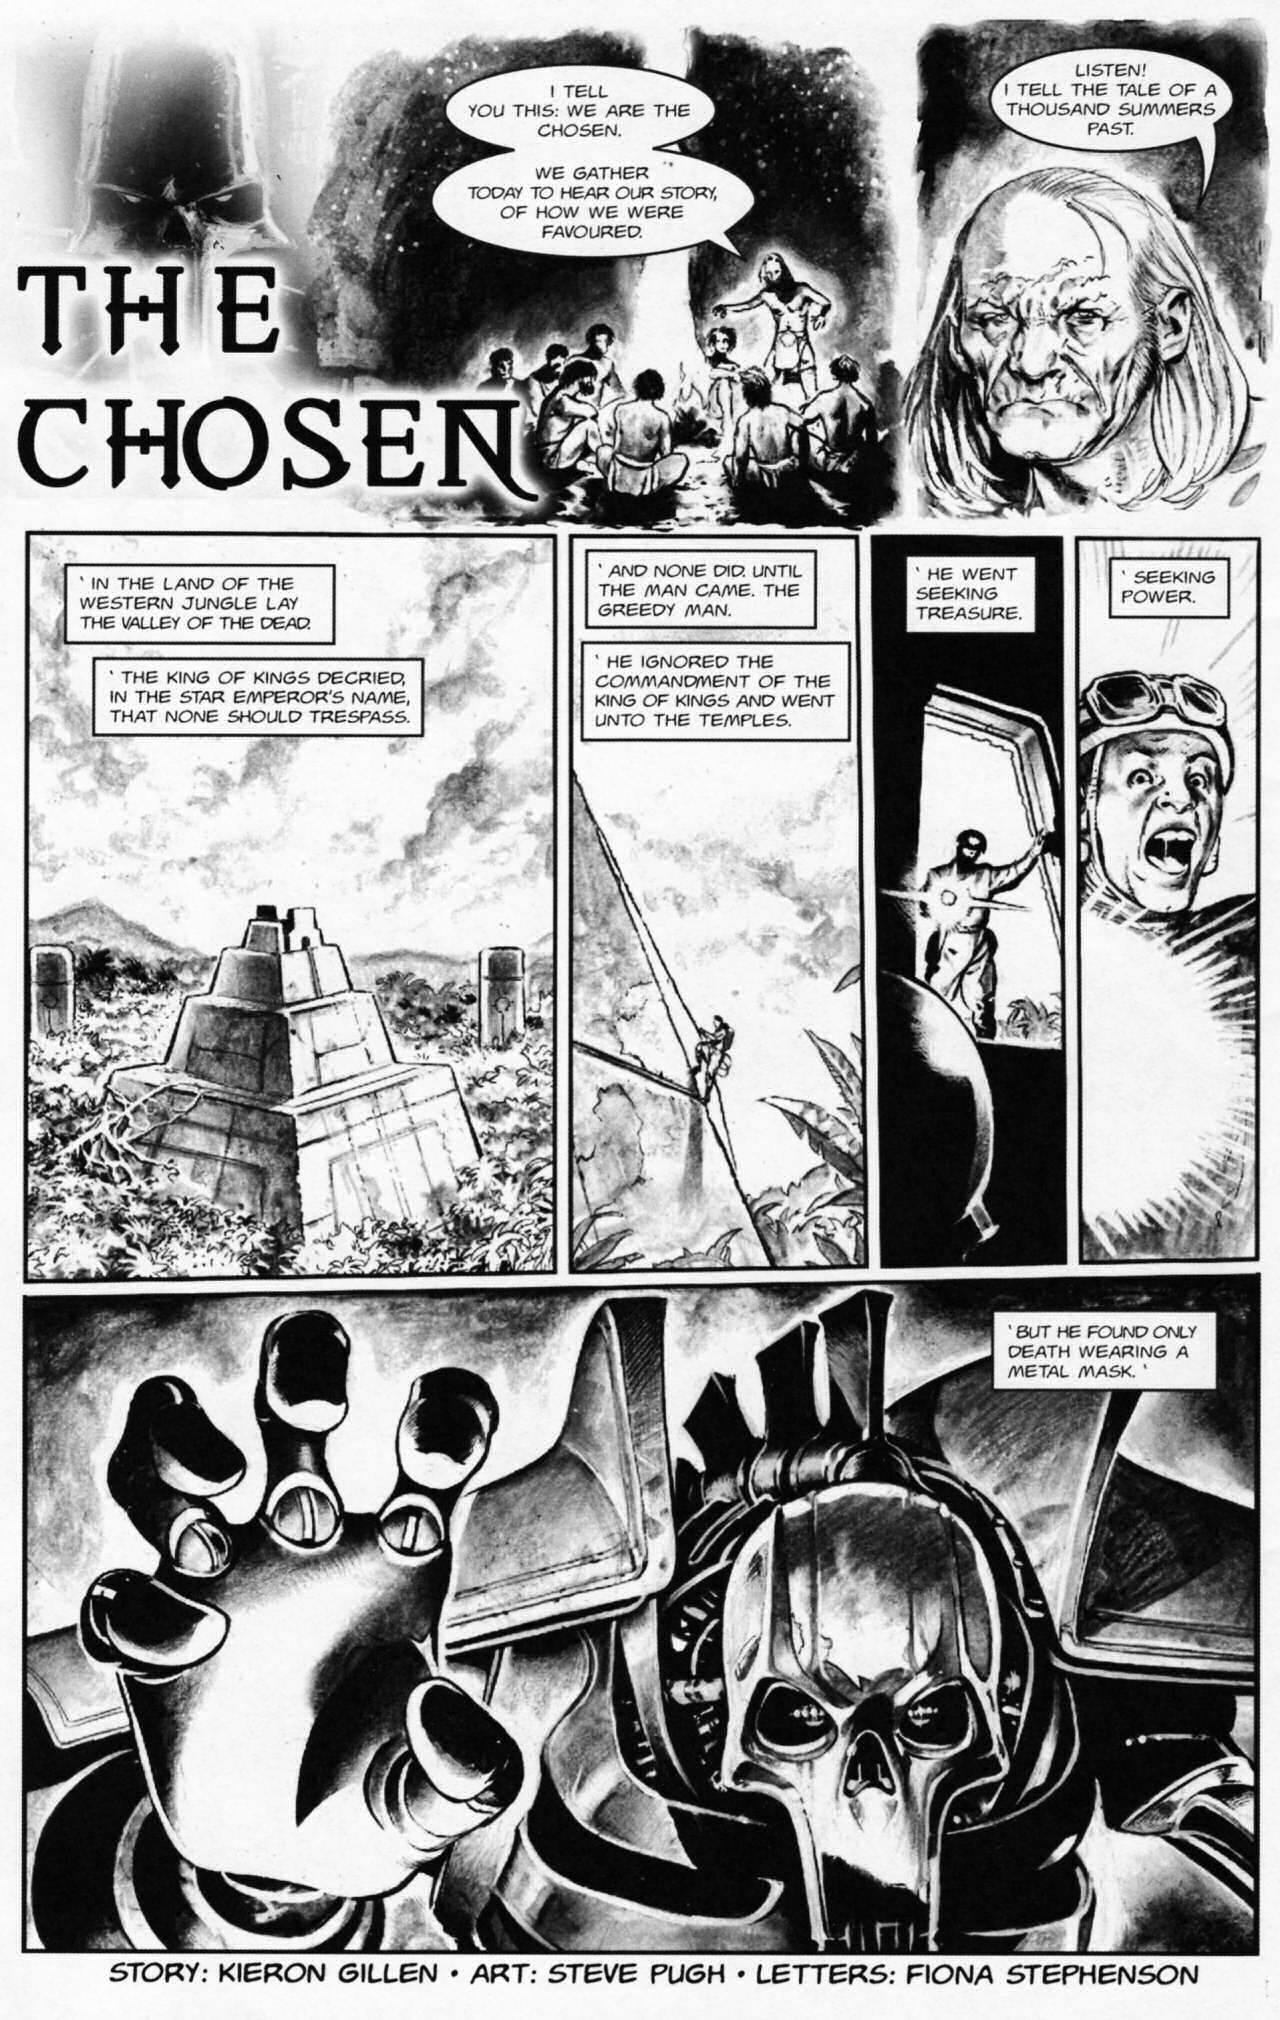 Warhammer Monthly Issue 83 - The Chosen by Kieron Gillen and Steve Pugh